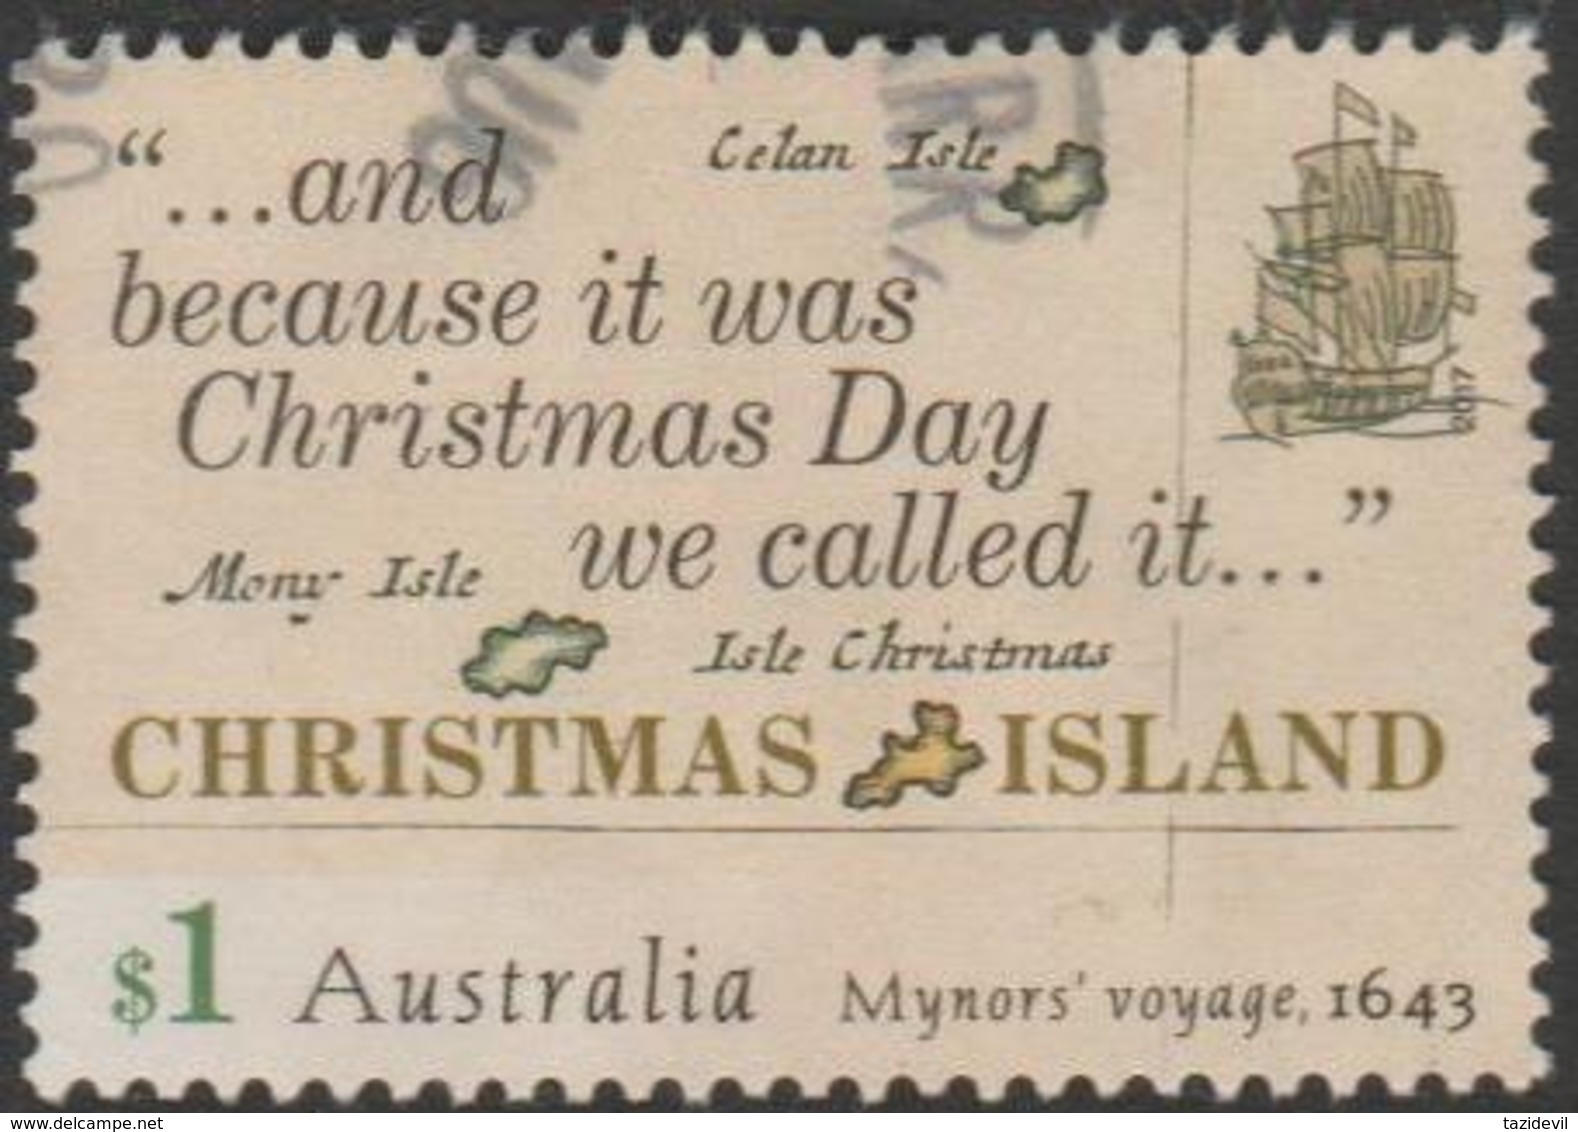 CHRISTMAS ISLAND - USED 2017 $1.00 Early Voyages "Royal Mary" 1643 - Christmas Island